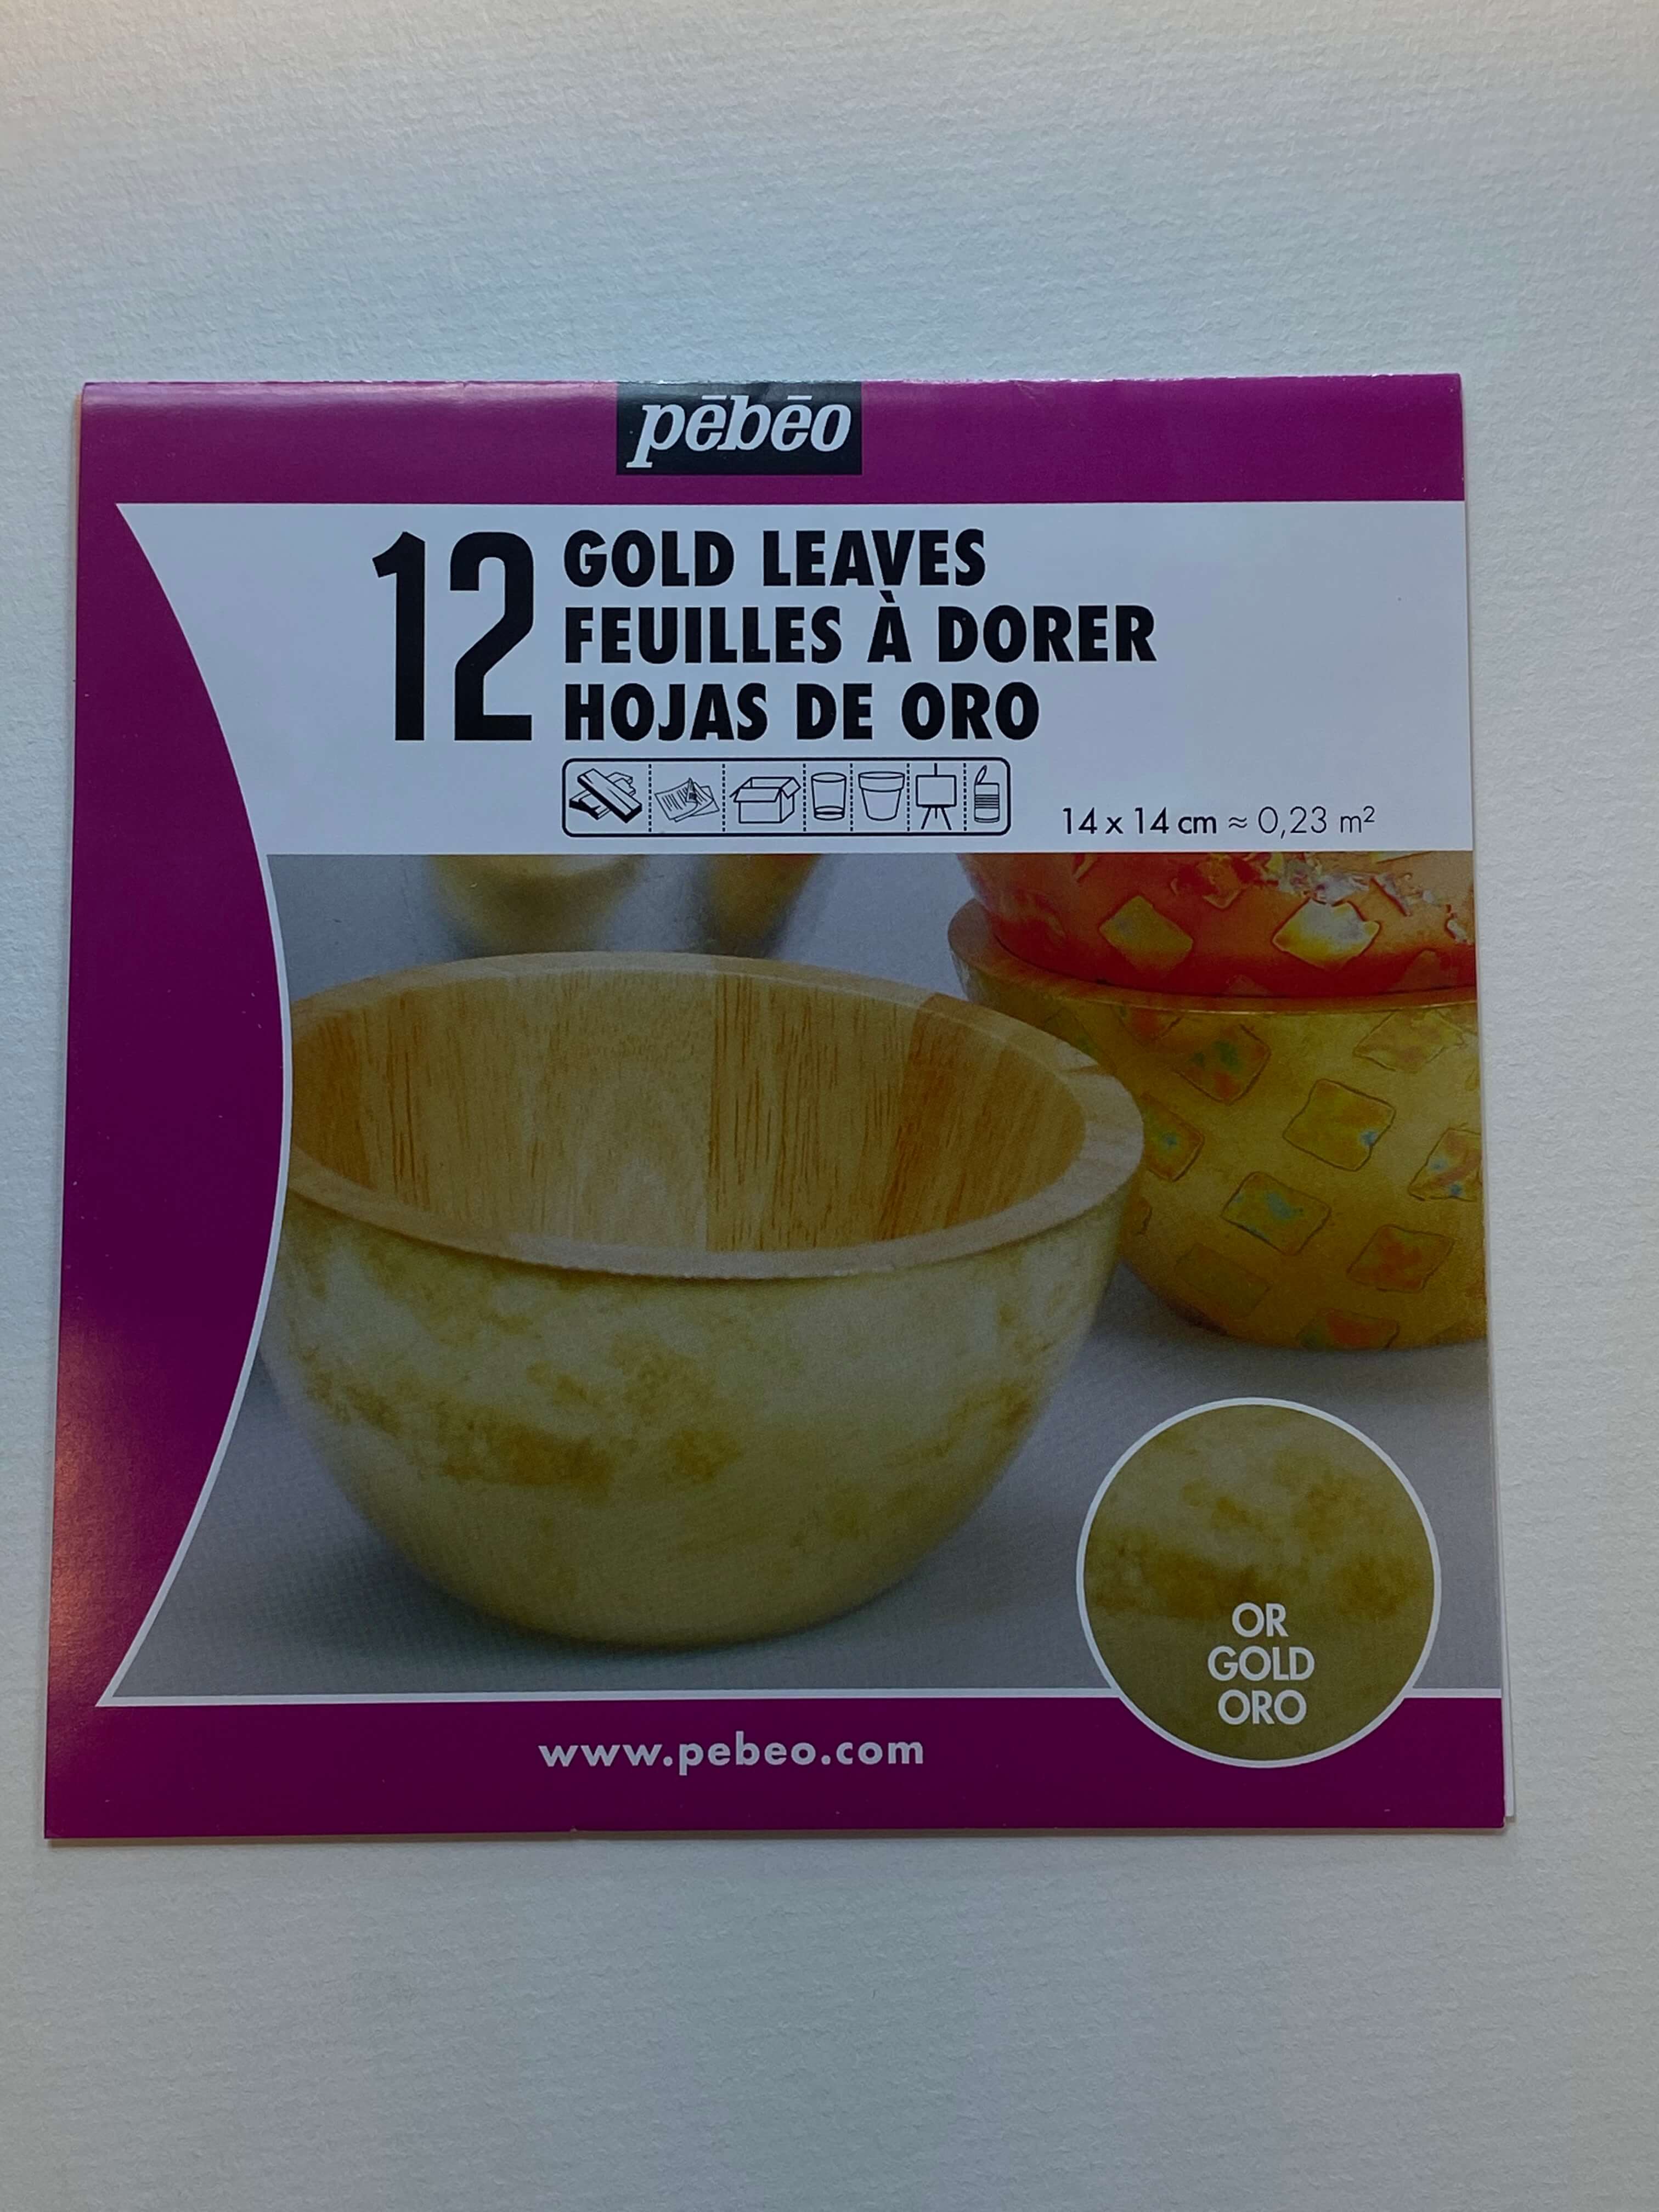 Pebeo 12 Gold Leaves 14cm x 14cm